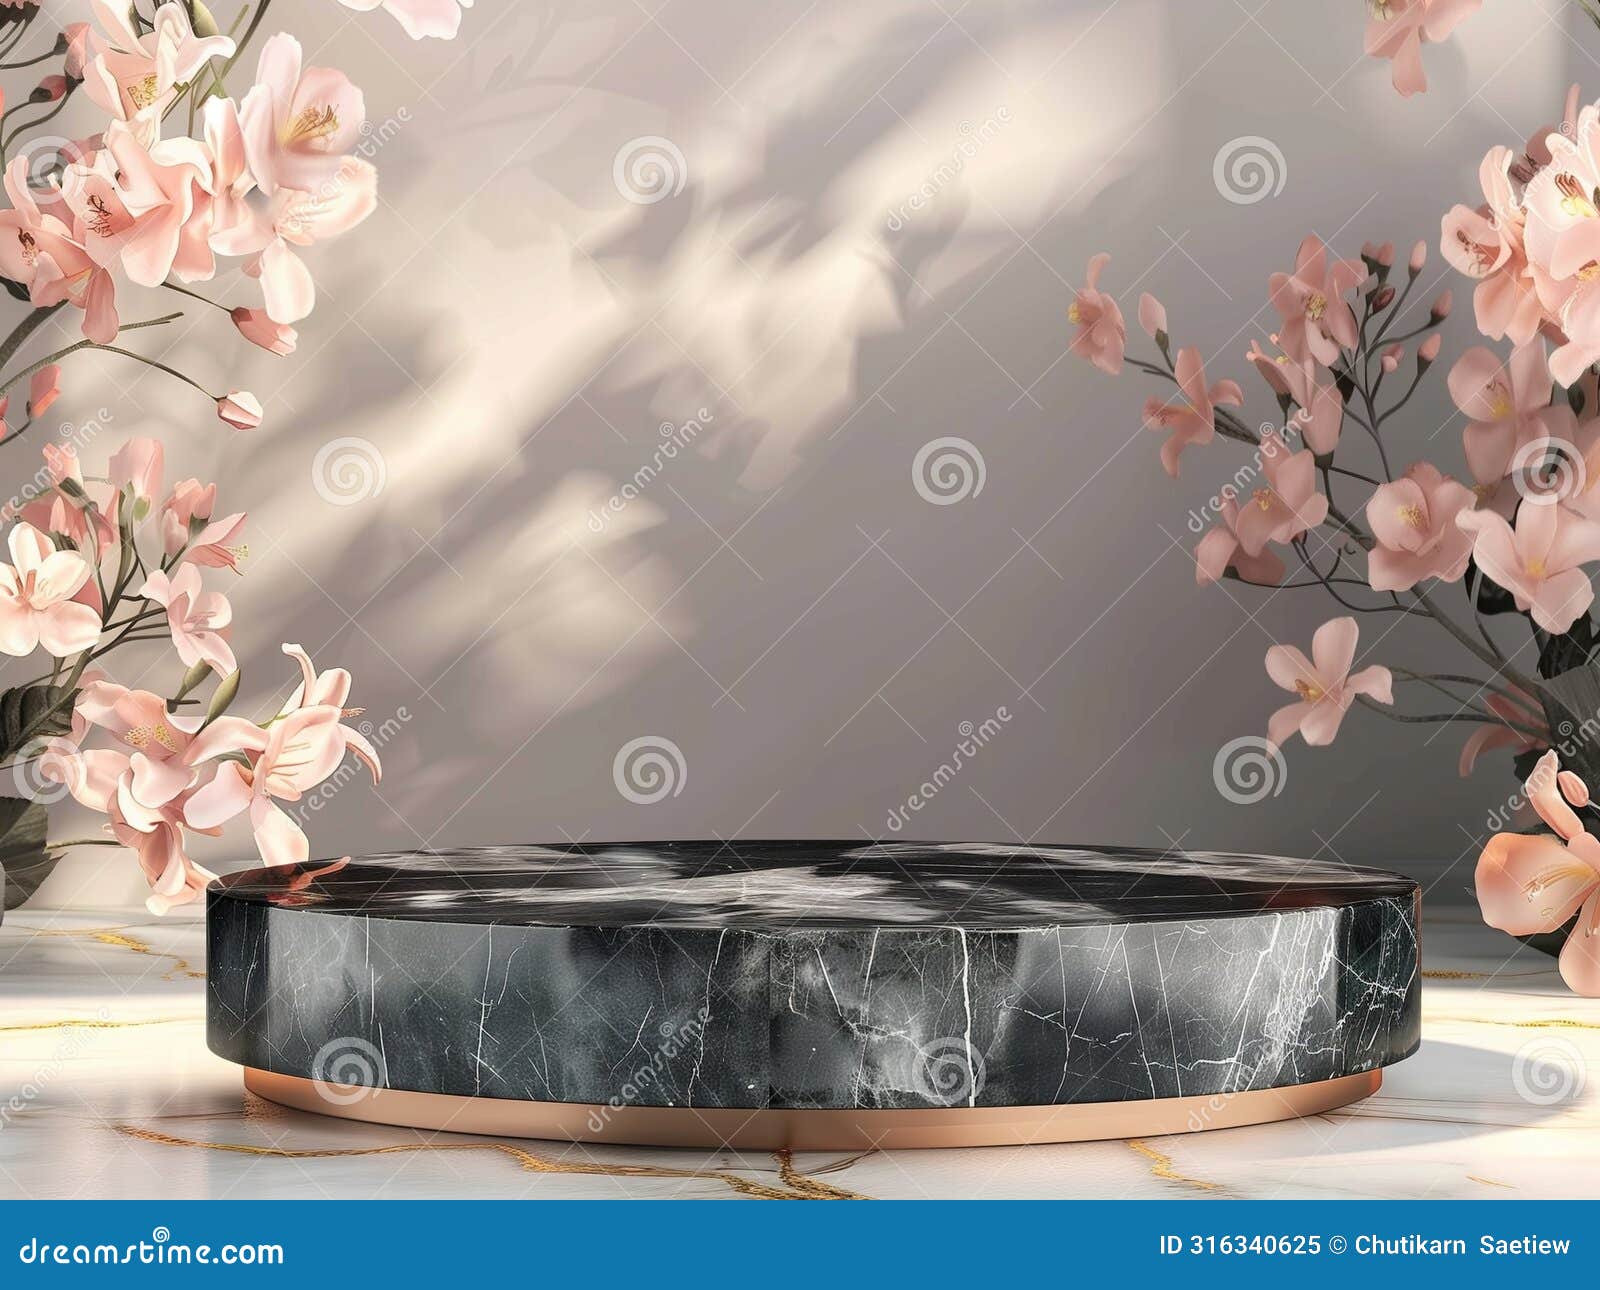 black marble podium, flowers background,aigenerated